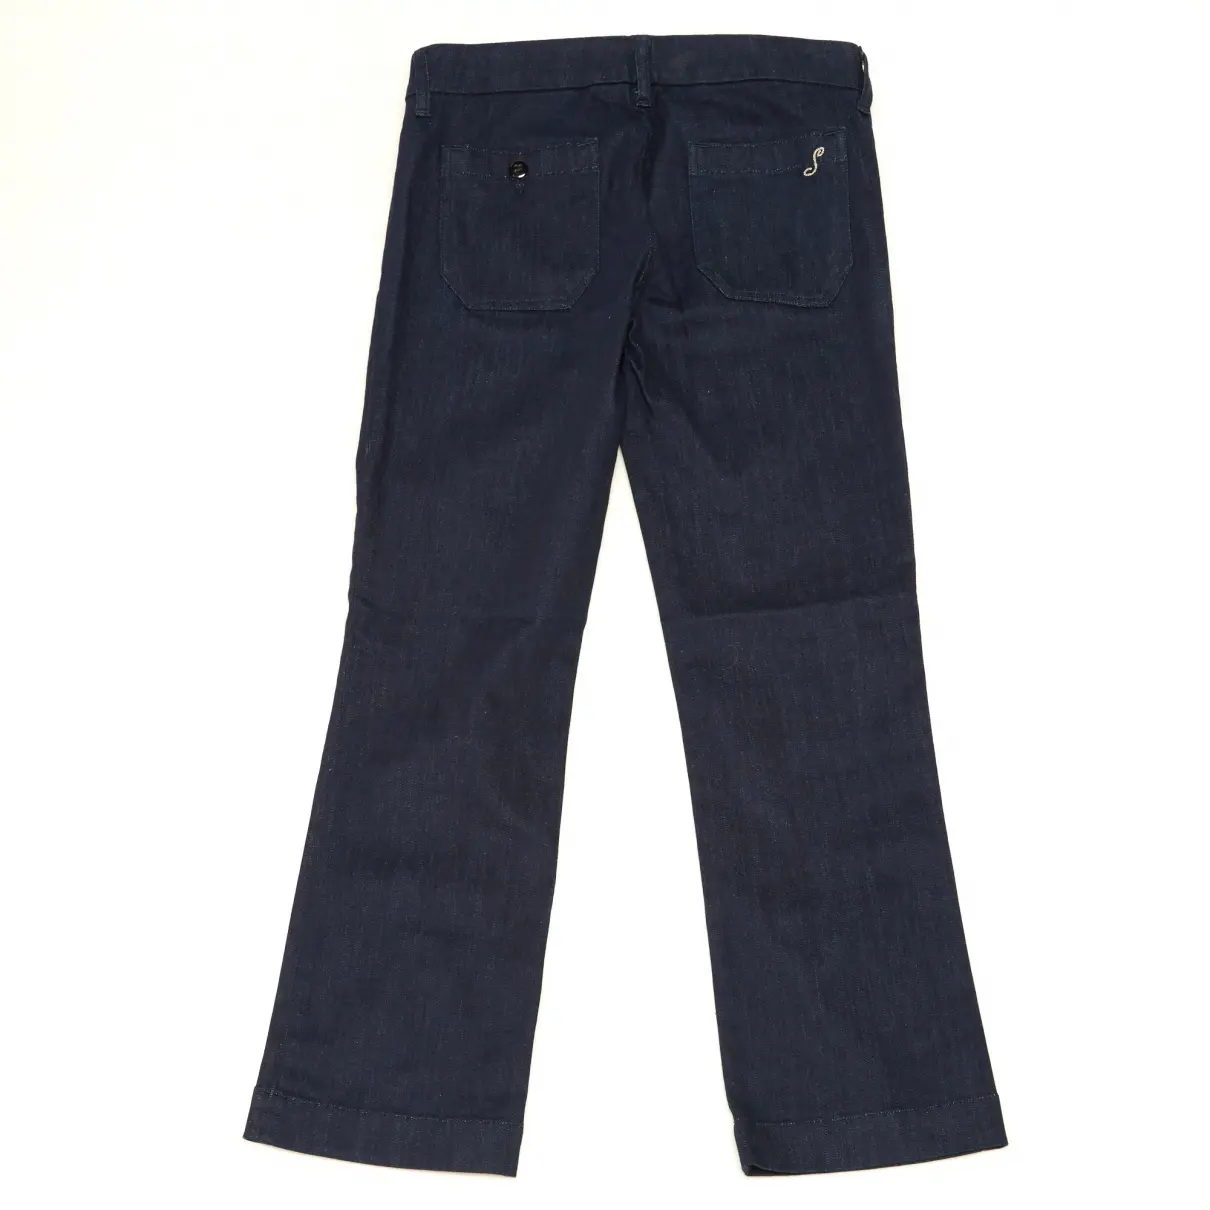 Buy Seafarer Navy Cotton - elasthane Jeans online